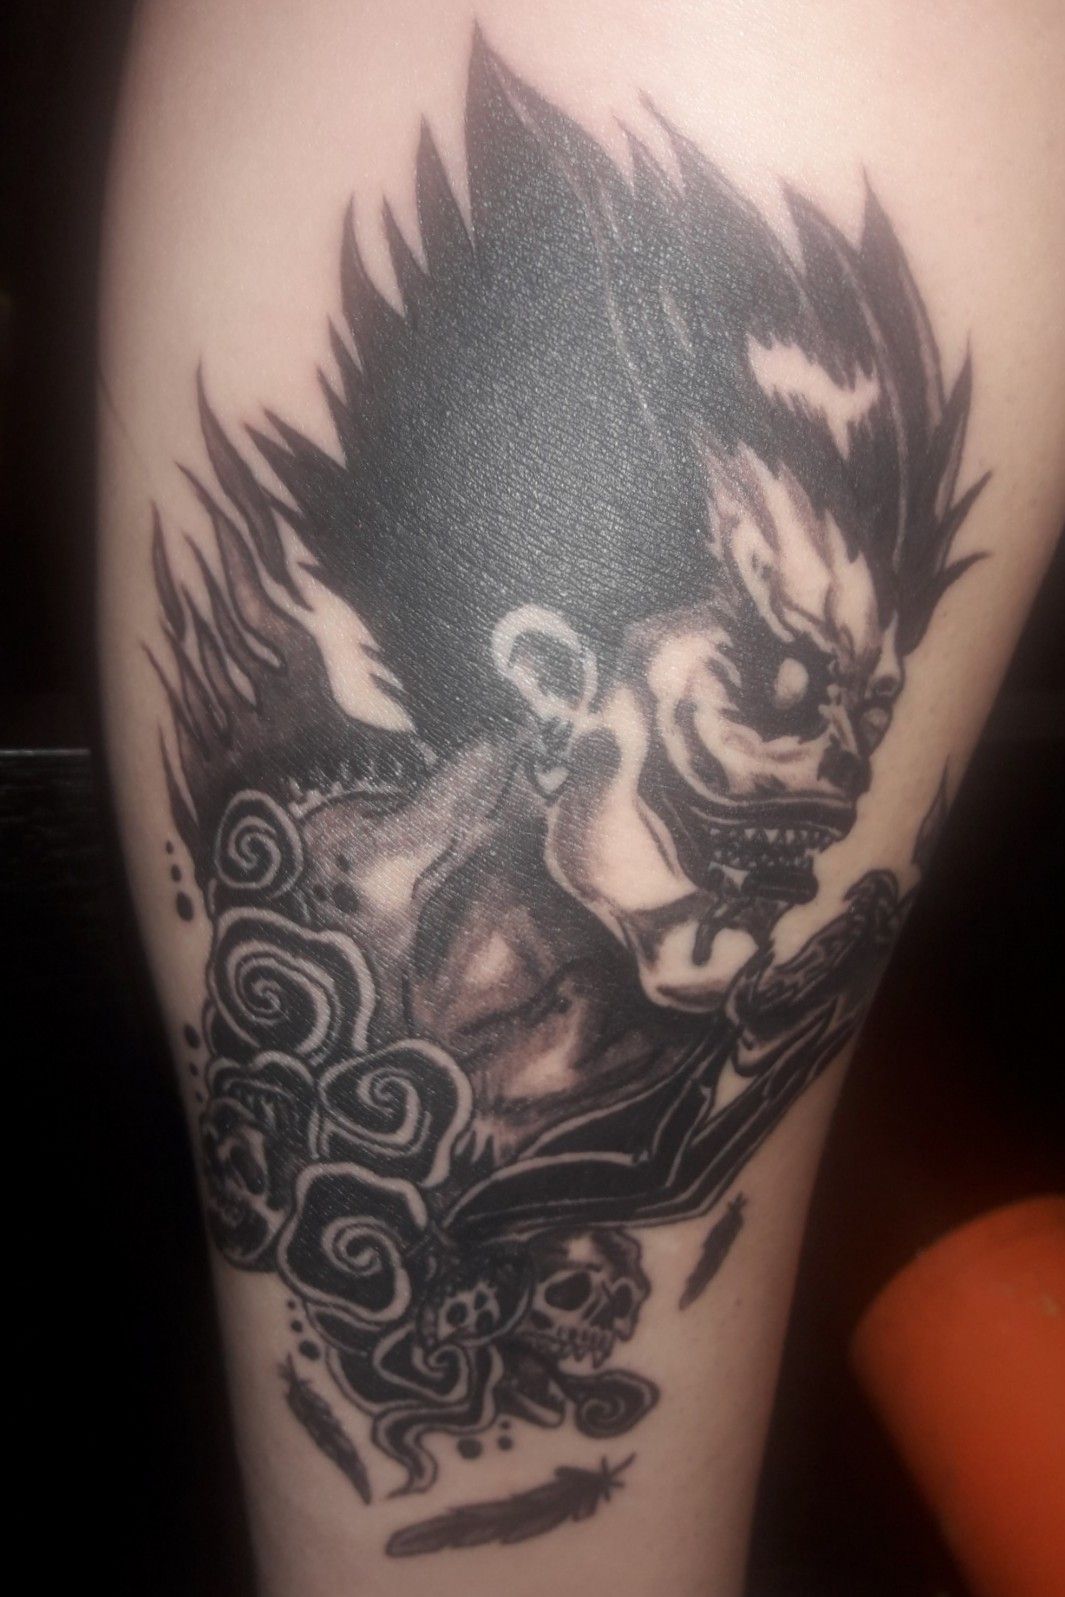 Ryuk tattoo by TashaJane on DeviantArt